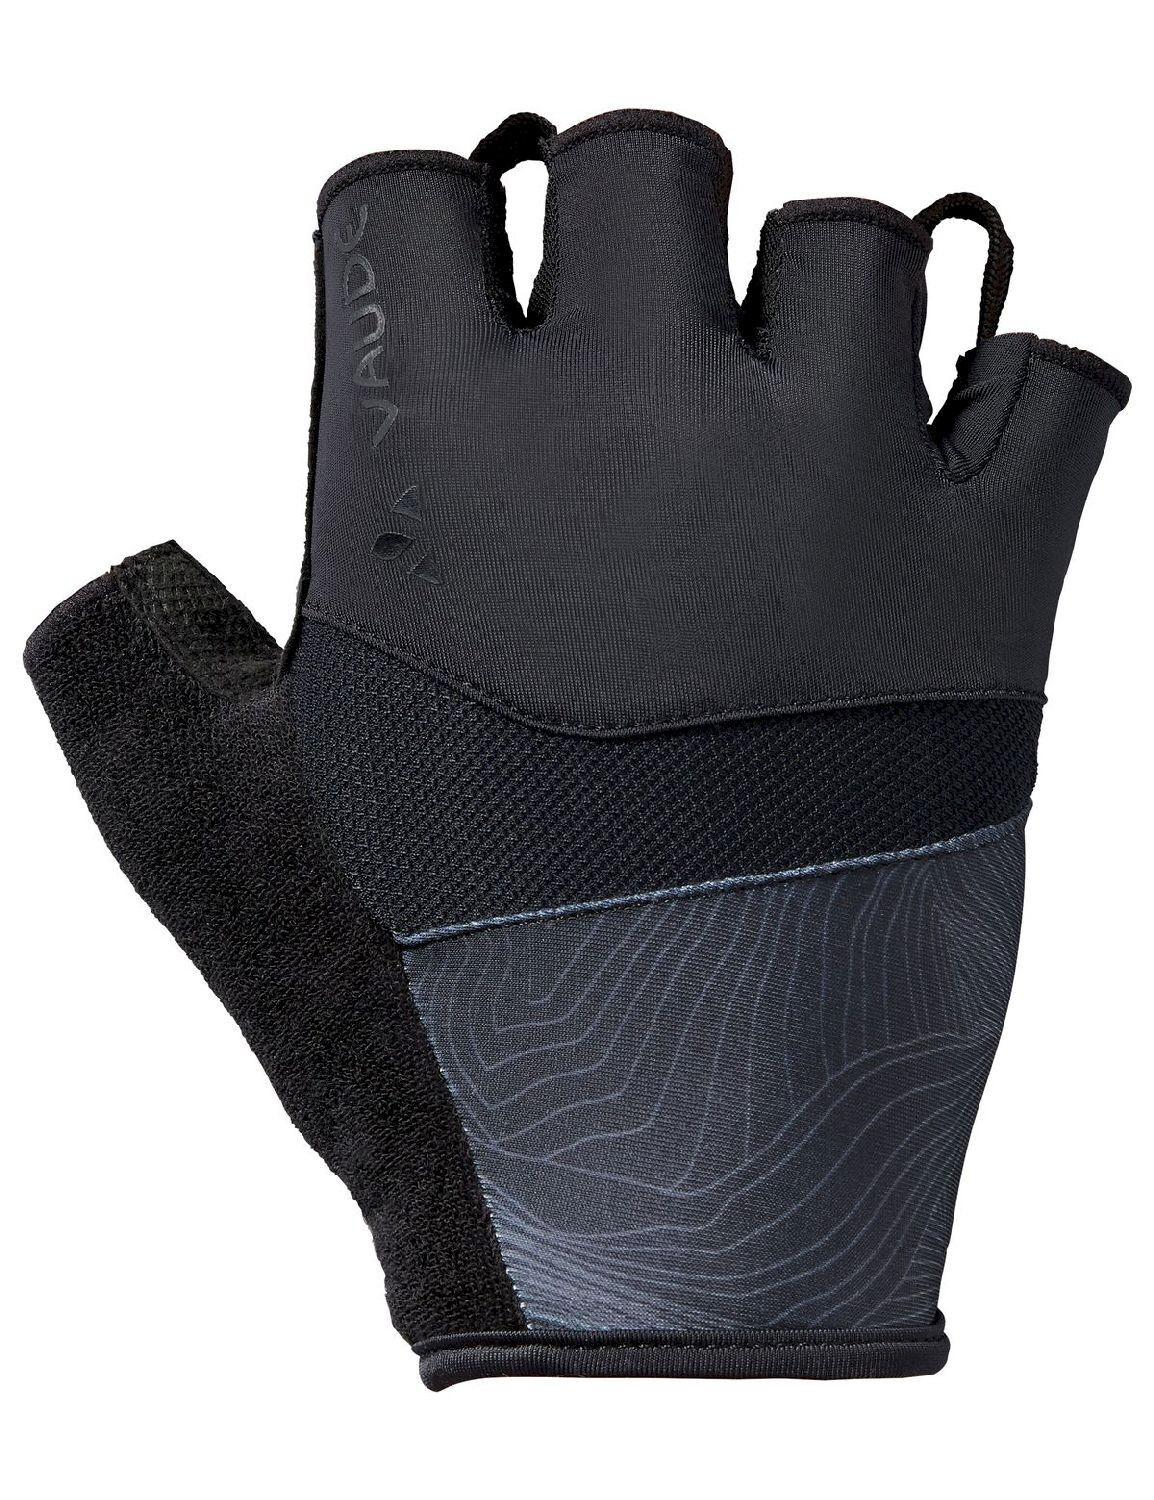 Vaude Advanced Gloves II - Cycling gloves - Men's